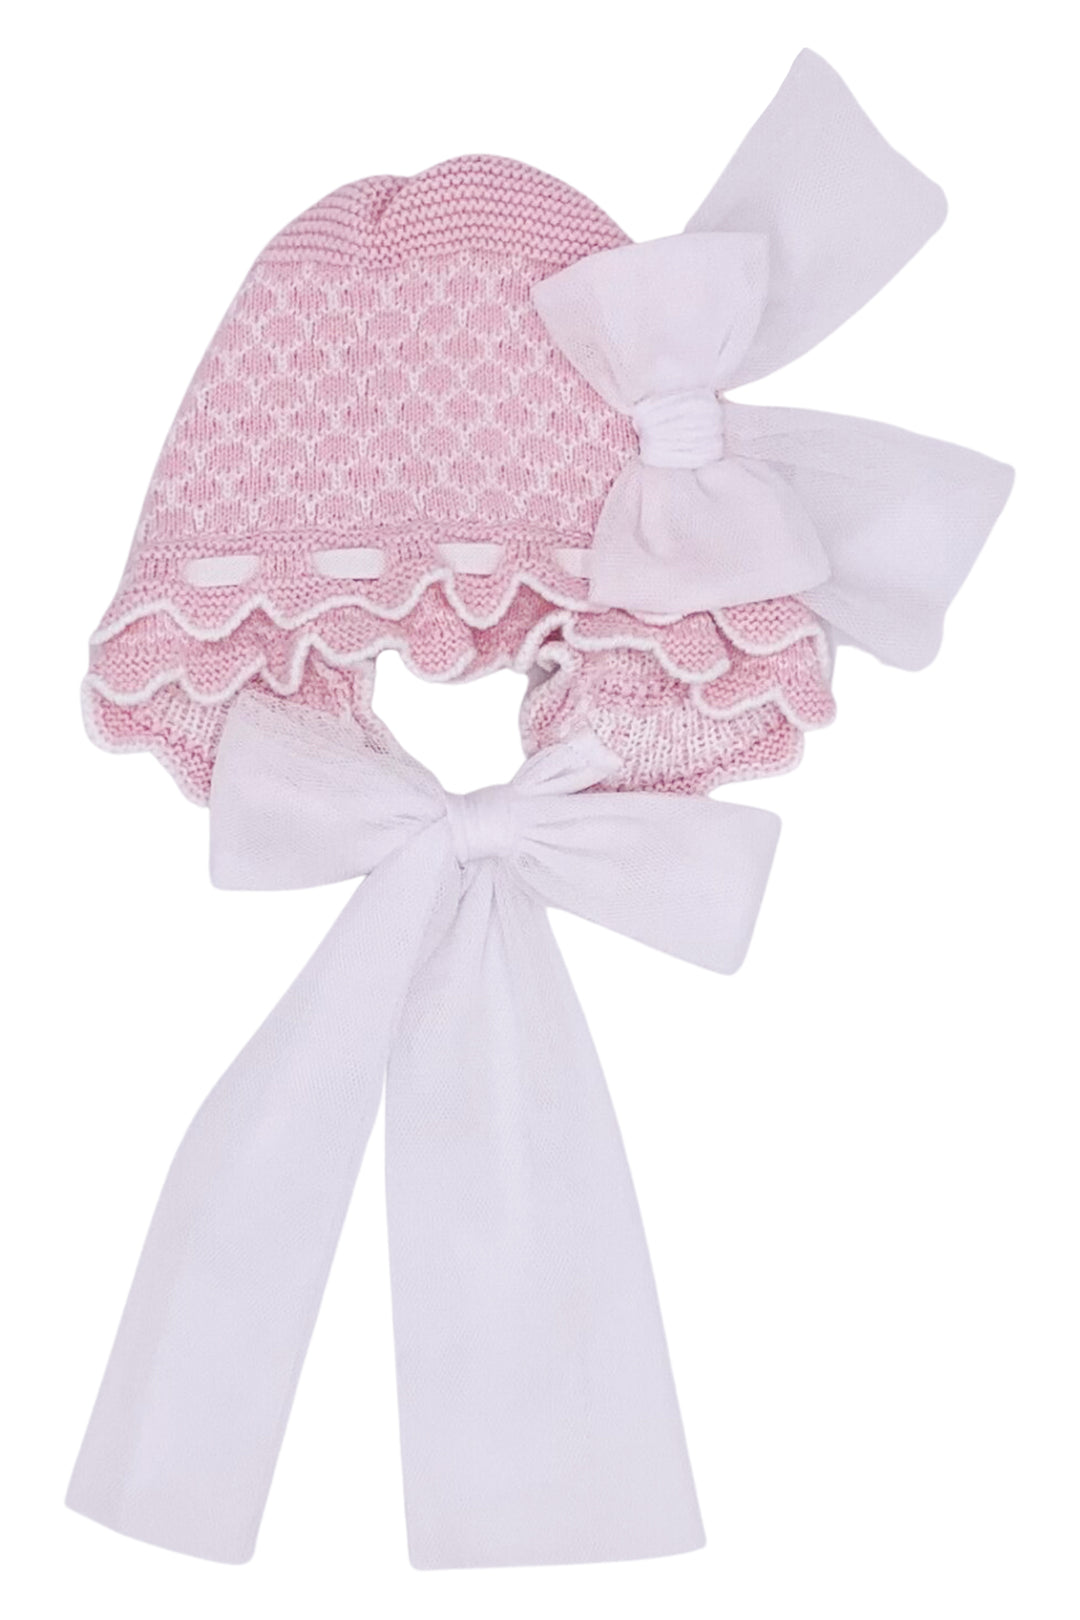 Rahigo Baby Pink Knit Tulle Bonnet | Millie and John